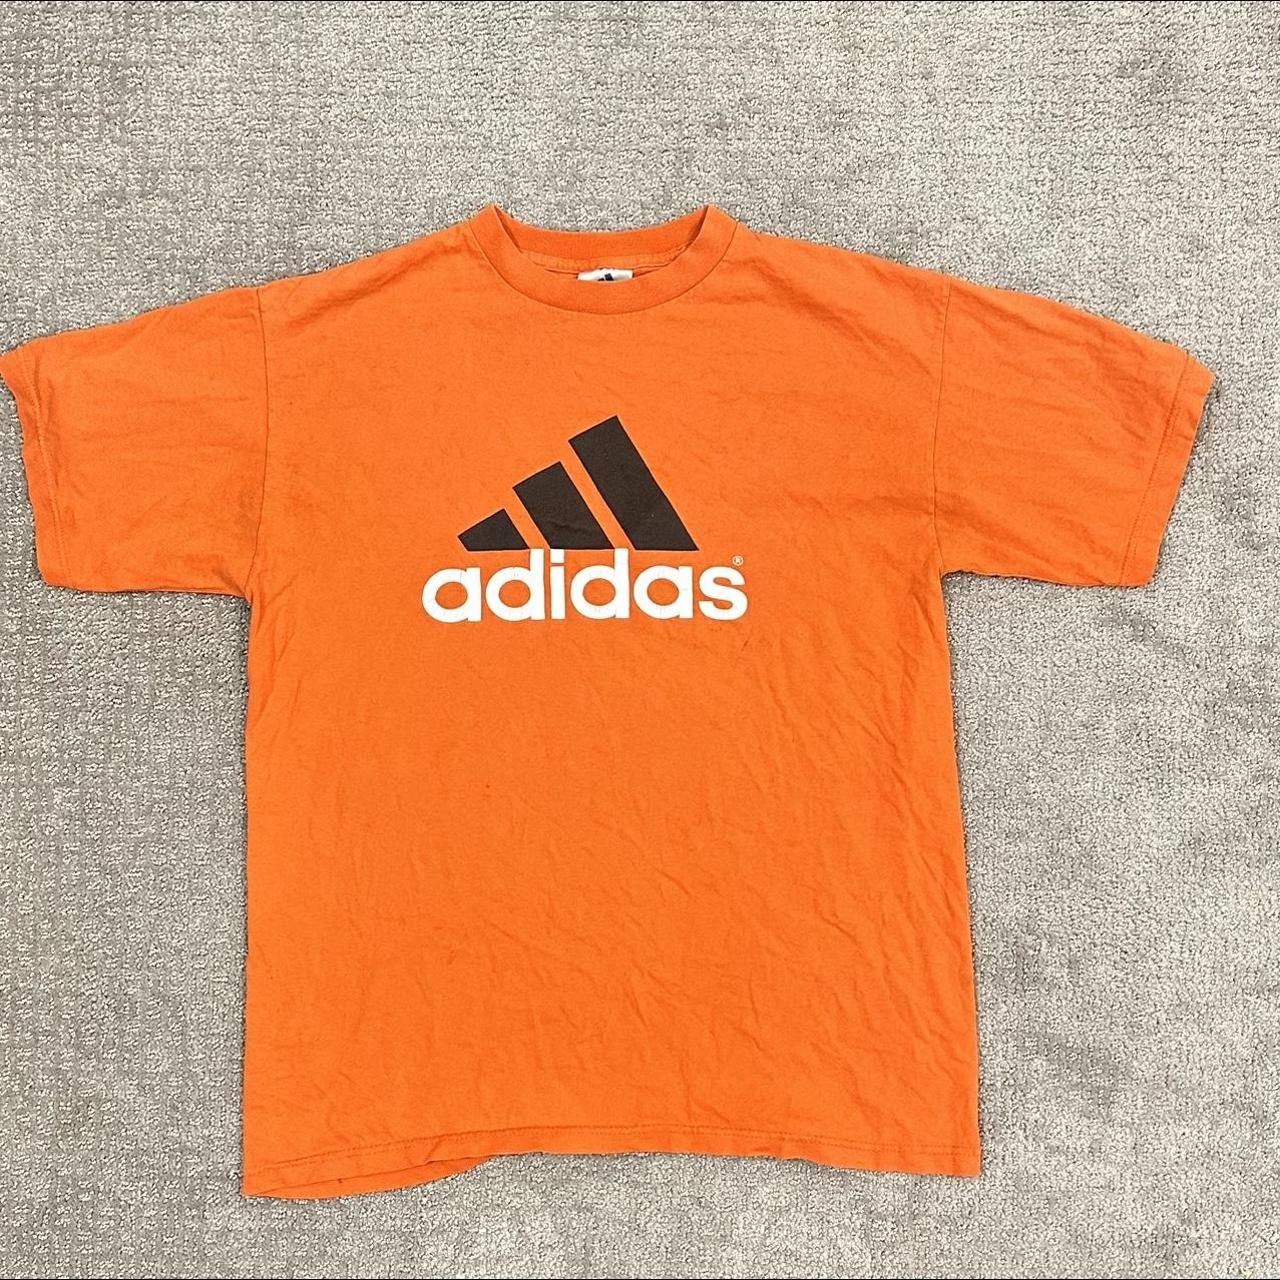 Adidas Men's Orange and Black T-shirt